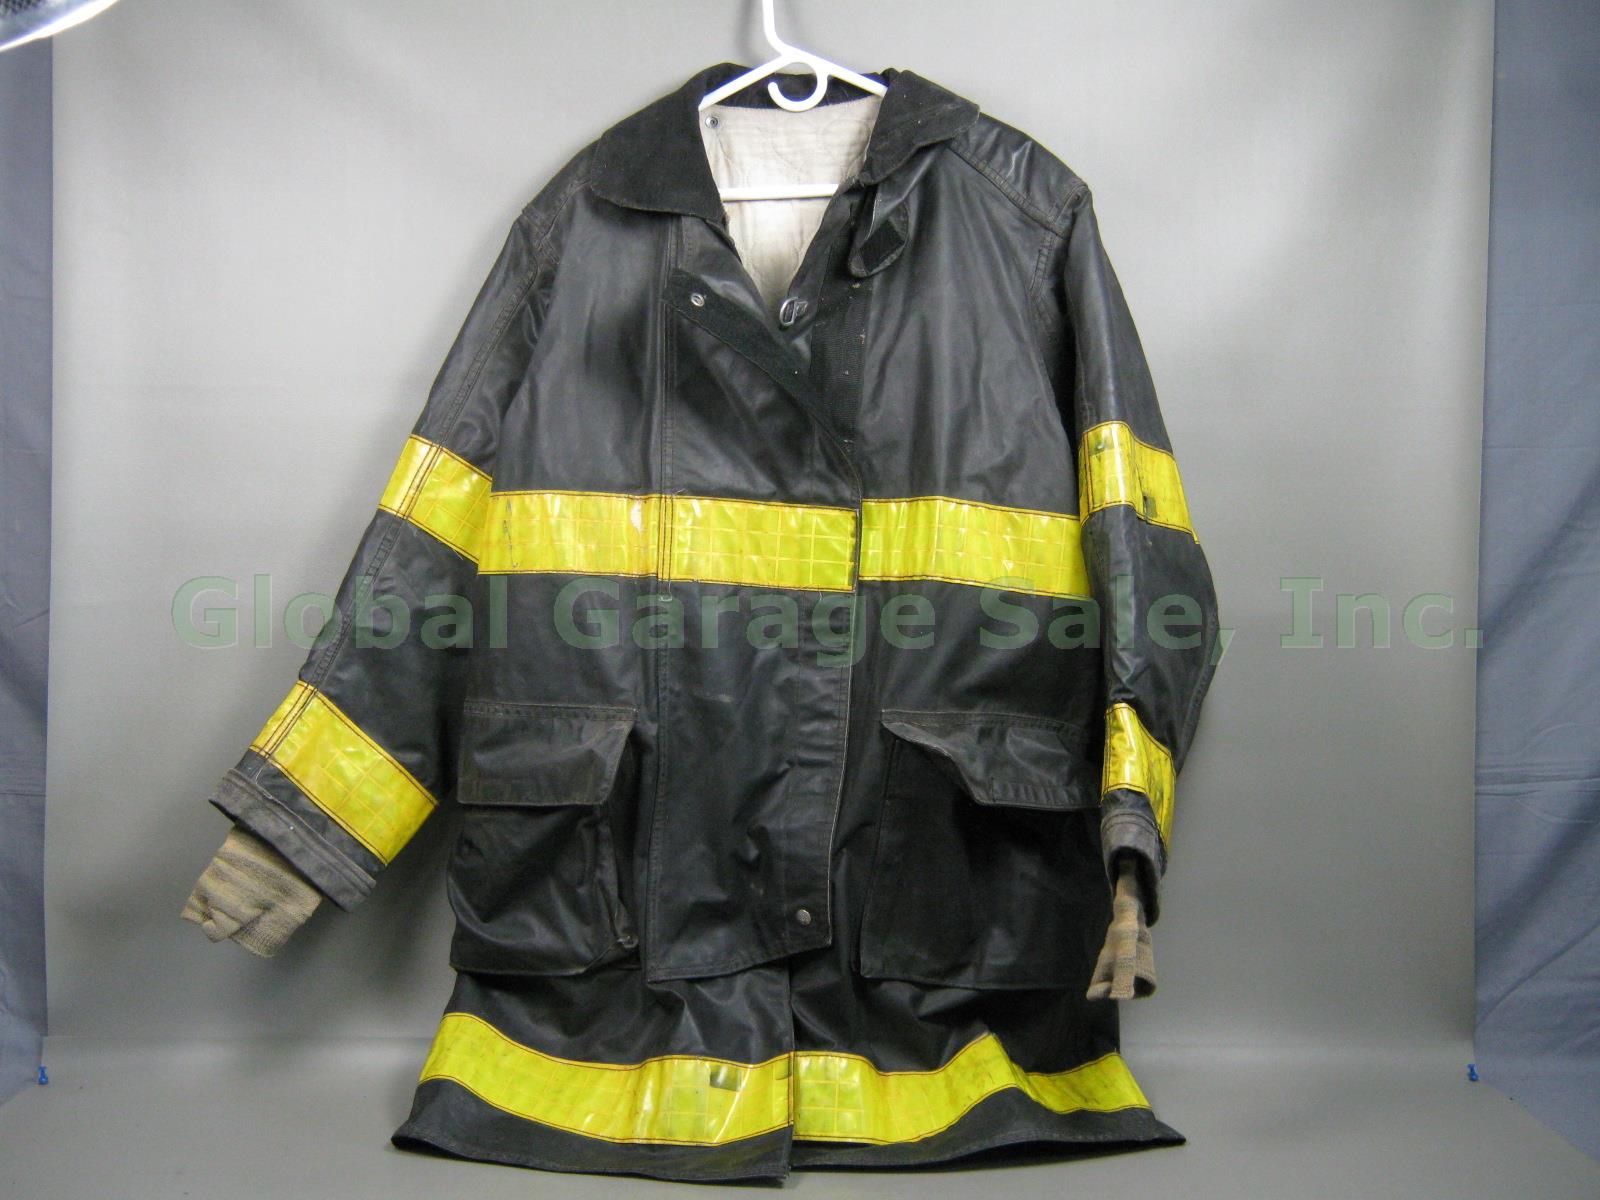 Fyrepel Chicago Illinois Firefighter Winter Turnout Bunker Jacket Coat 46-44 NR!